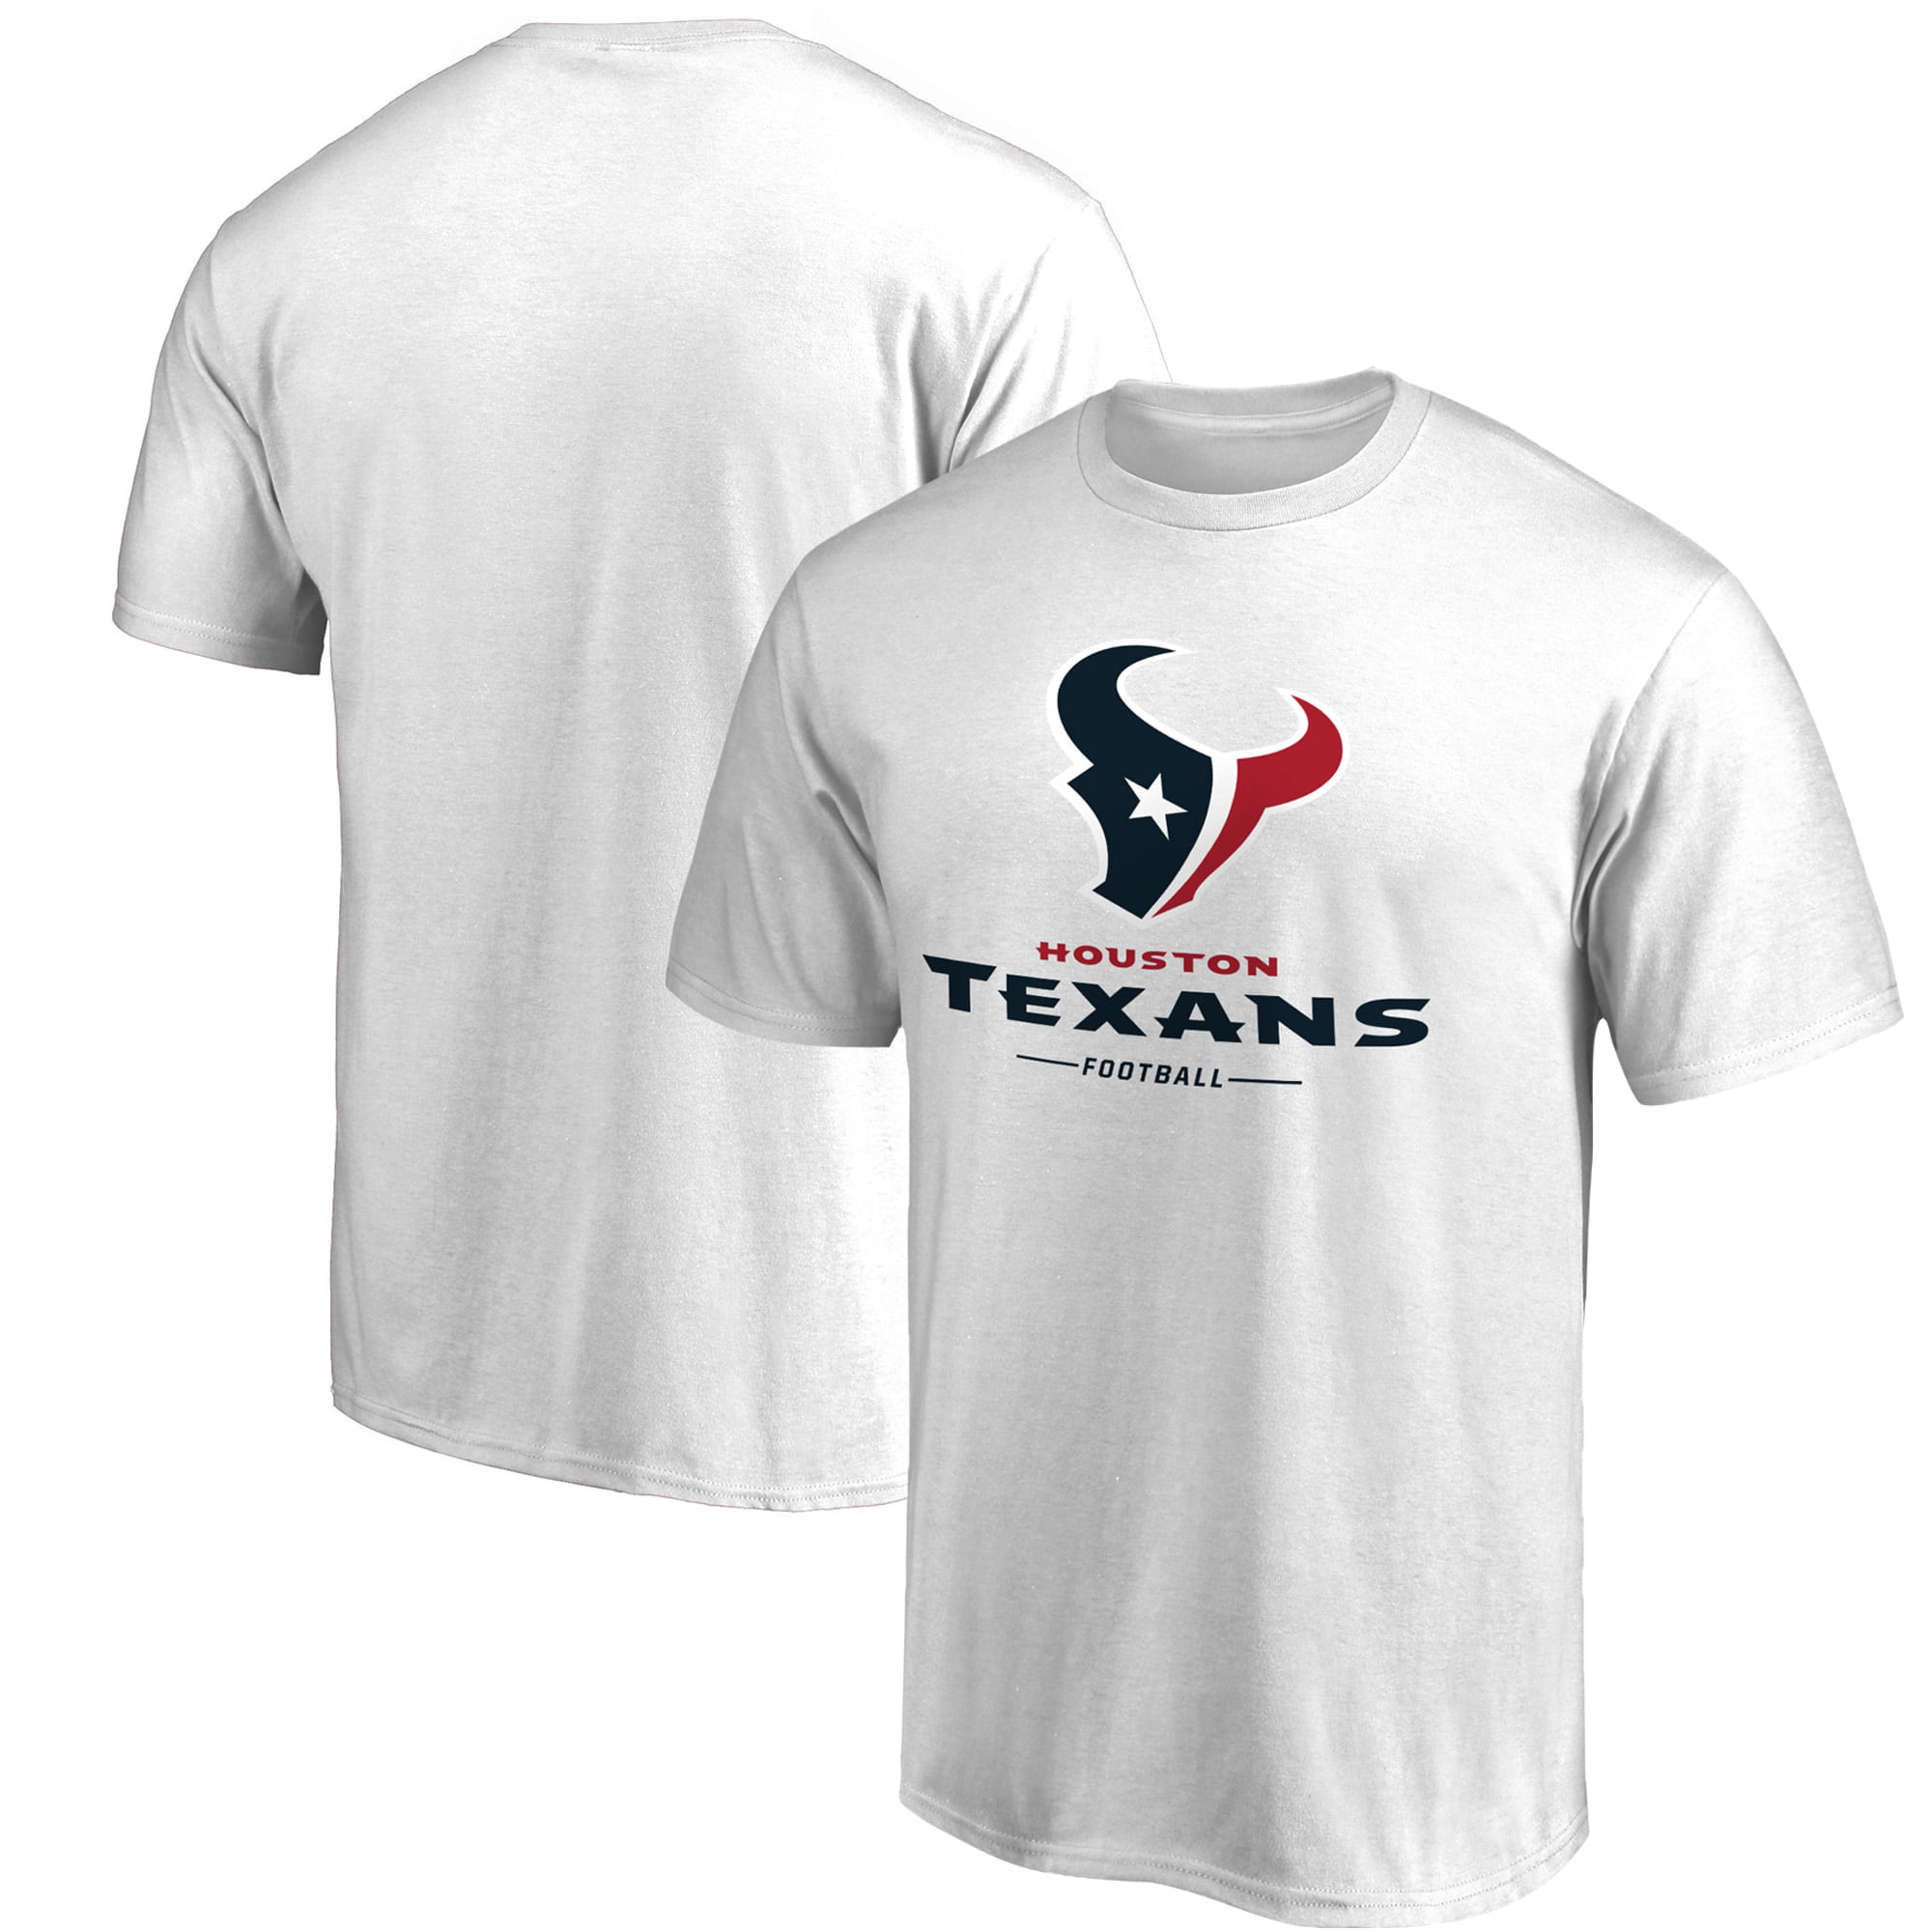 houston texans shirts for men